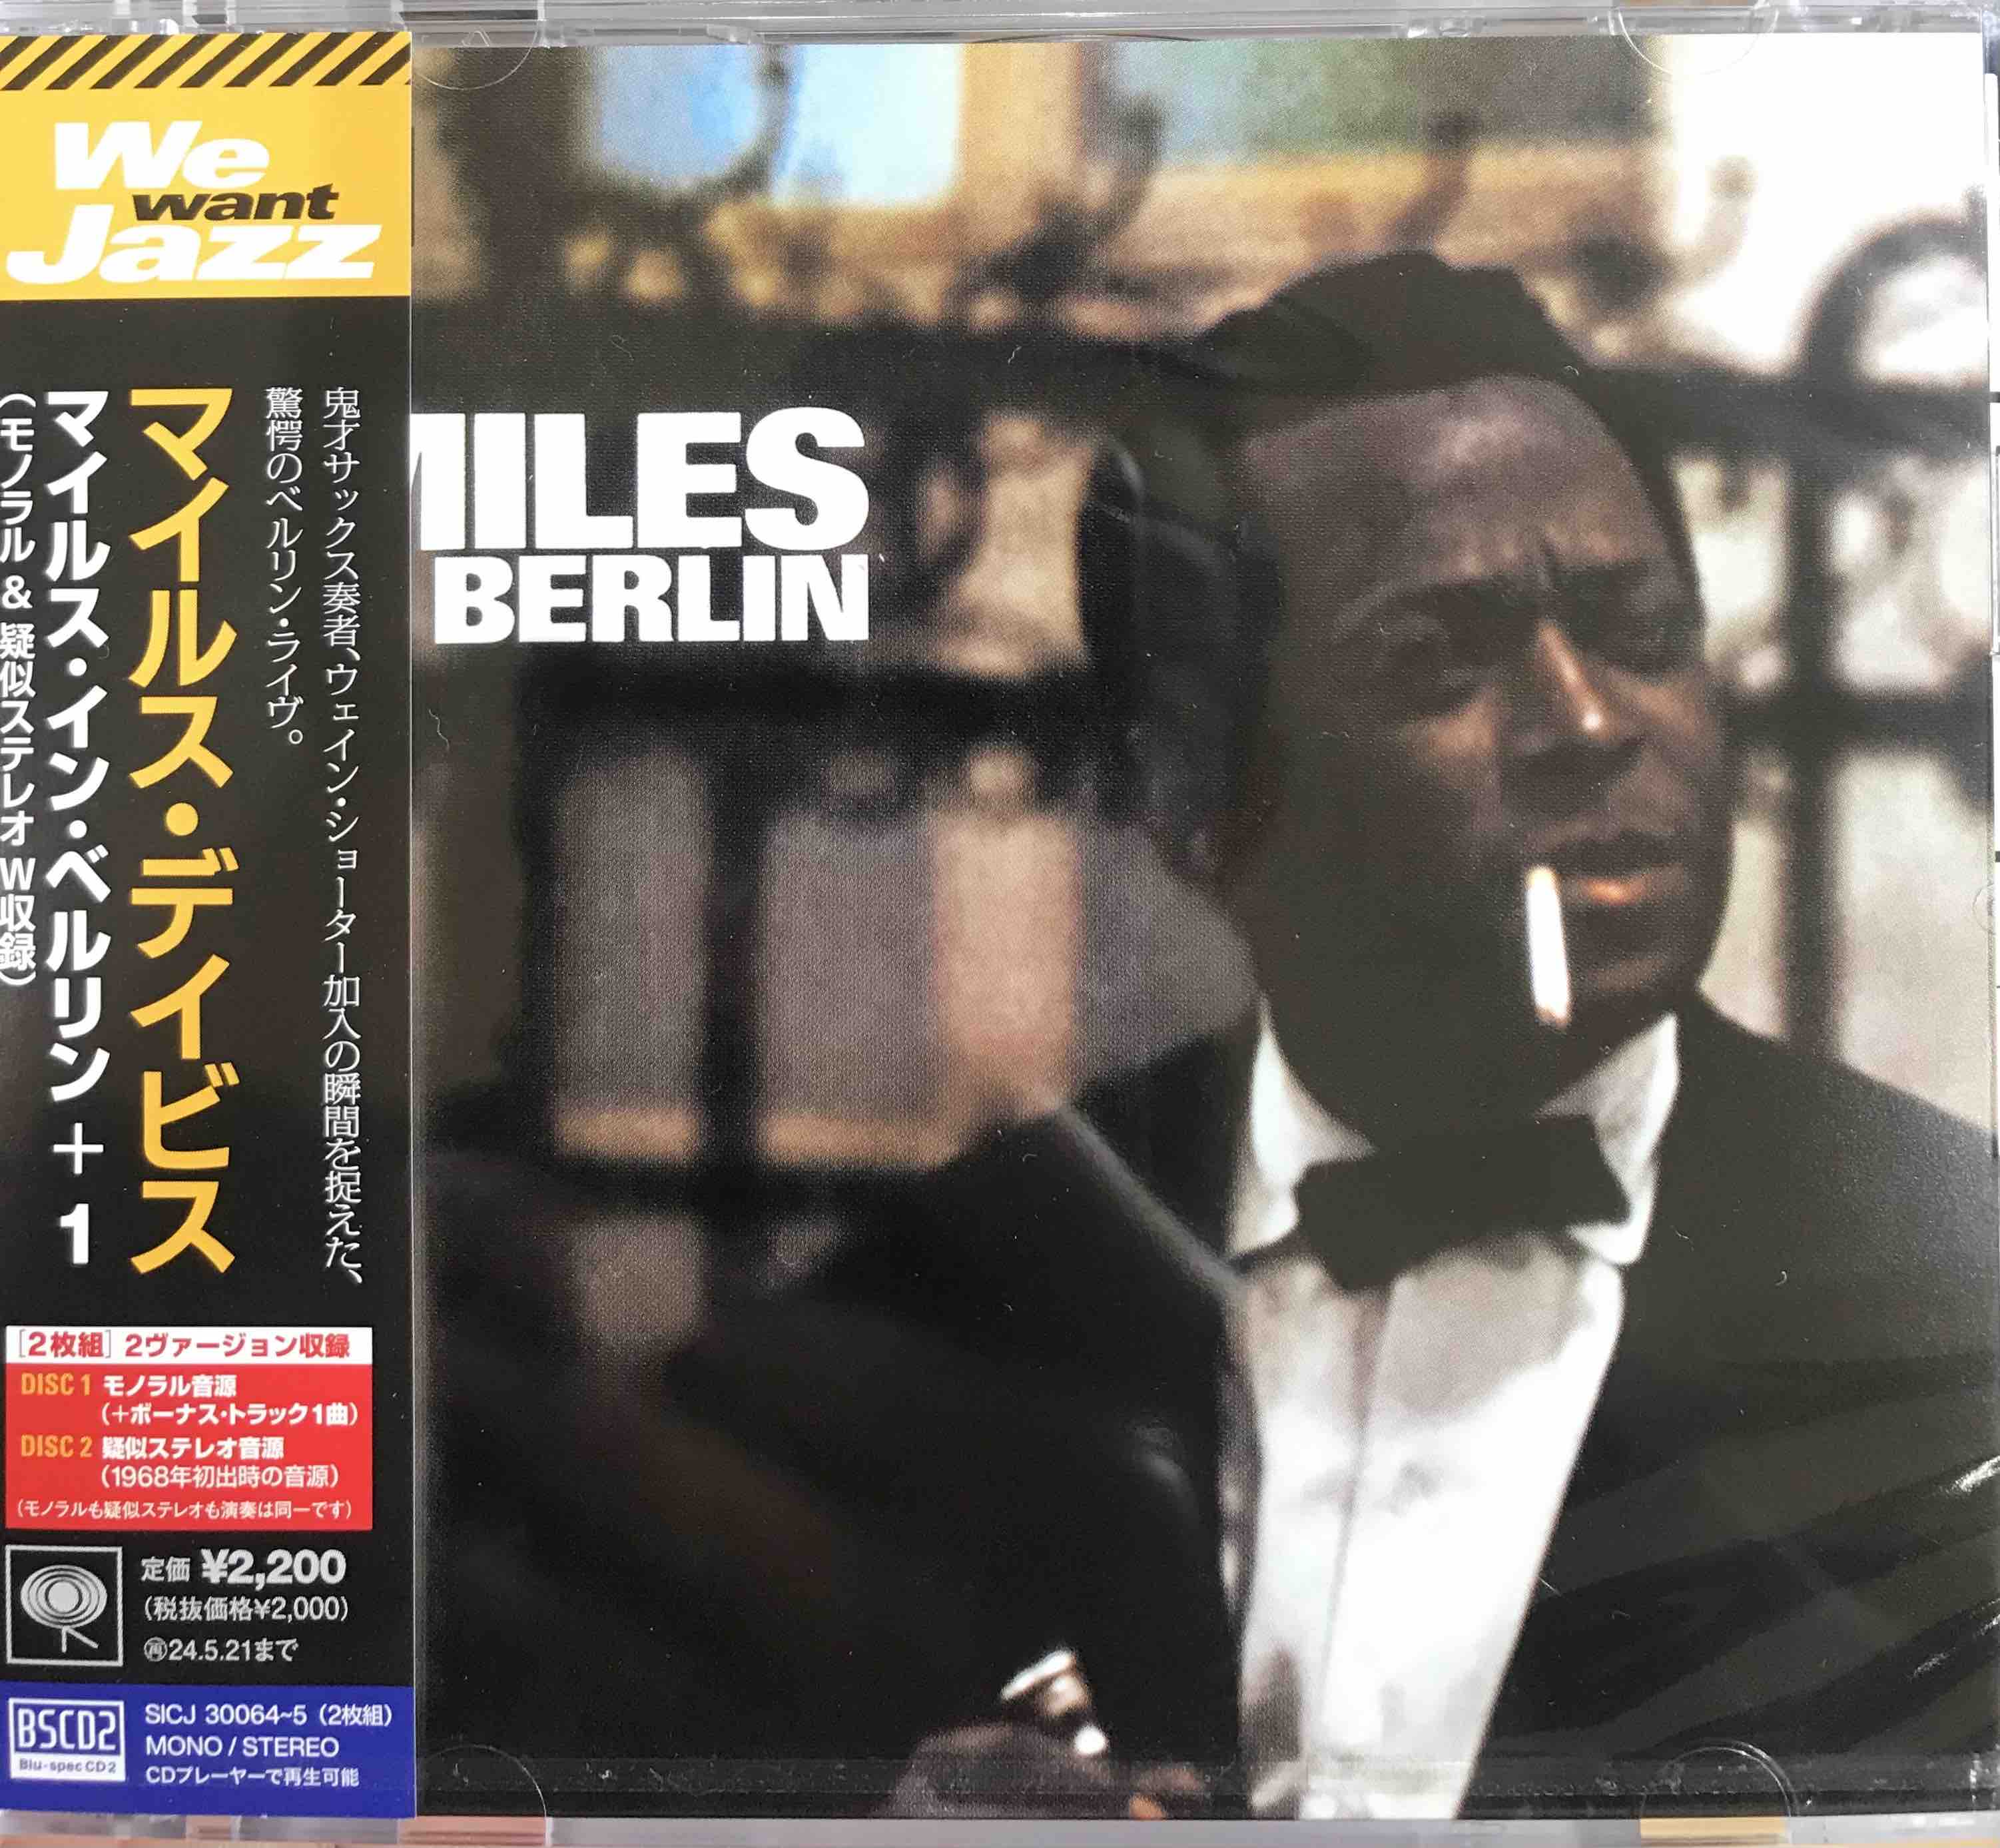 Miles Davis ‎– Miles In Berlin